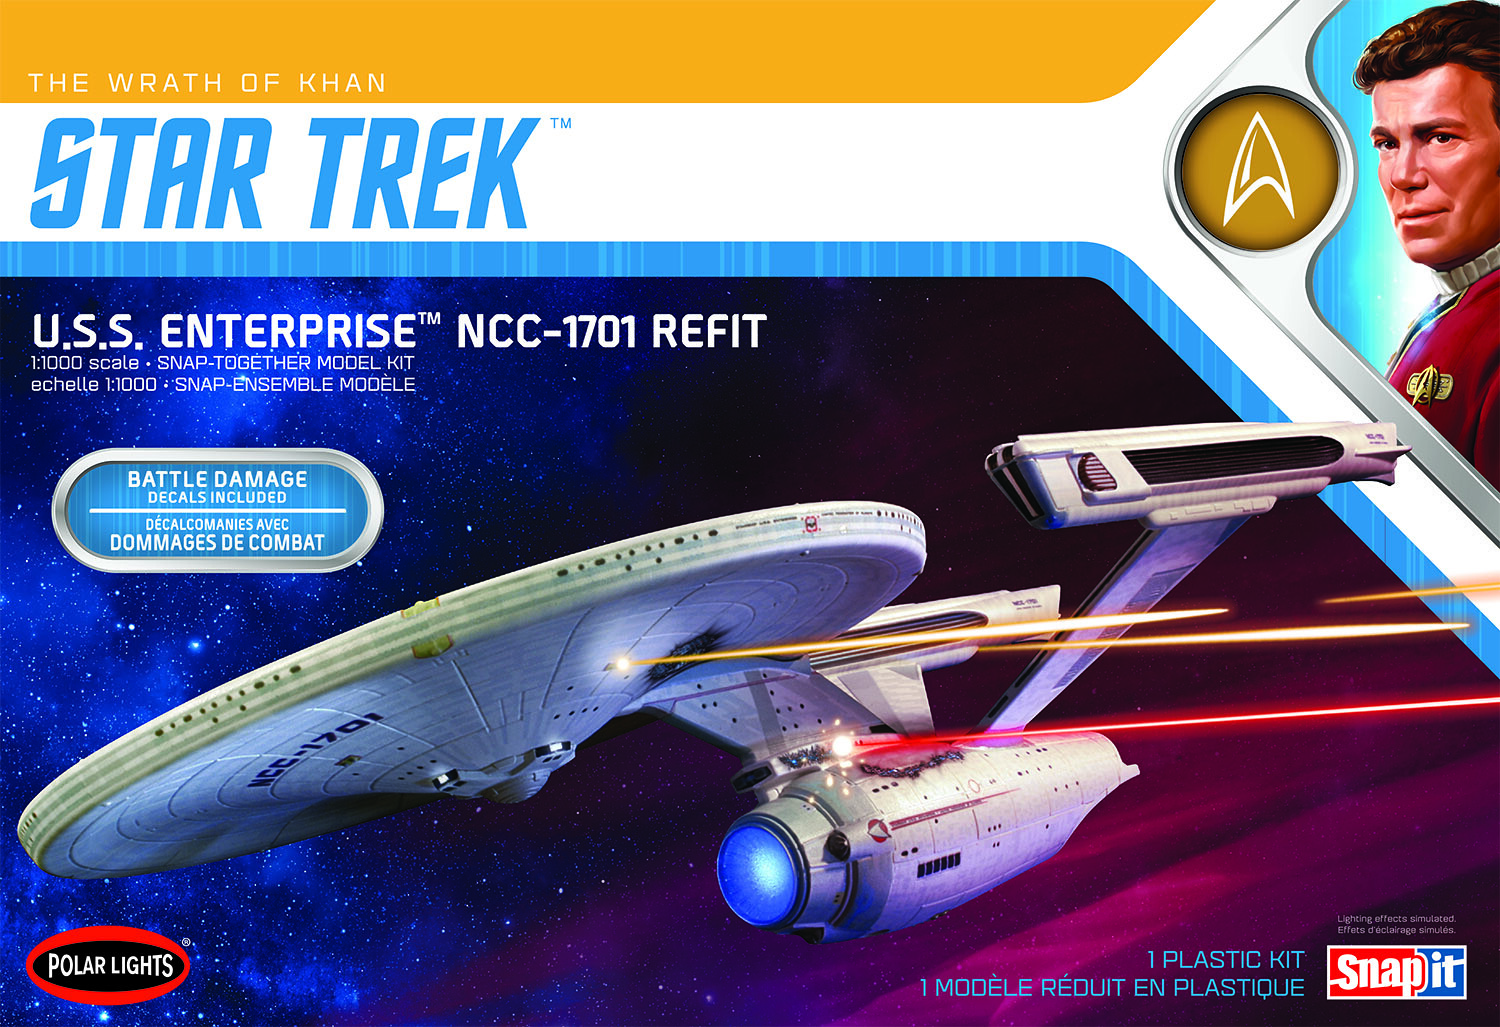 Star trek USS Enterprise NCC -1701 Refit